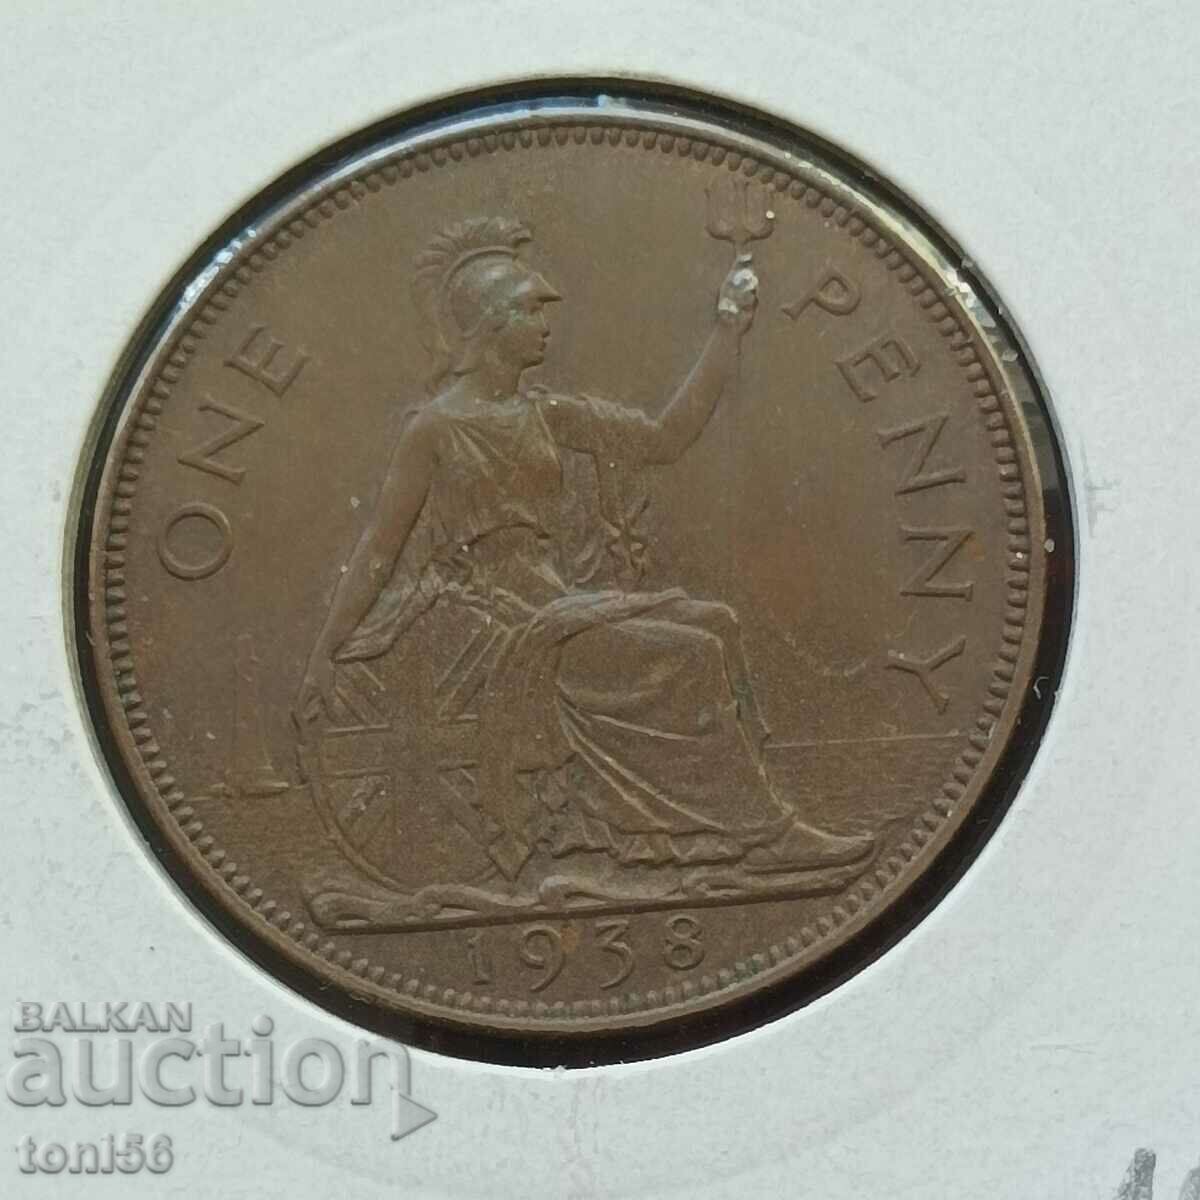 Anglia 1 penny 1938 George VI UNC